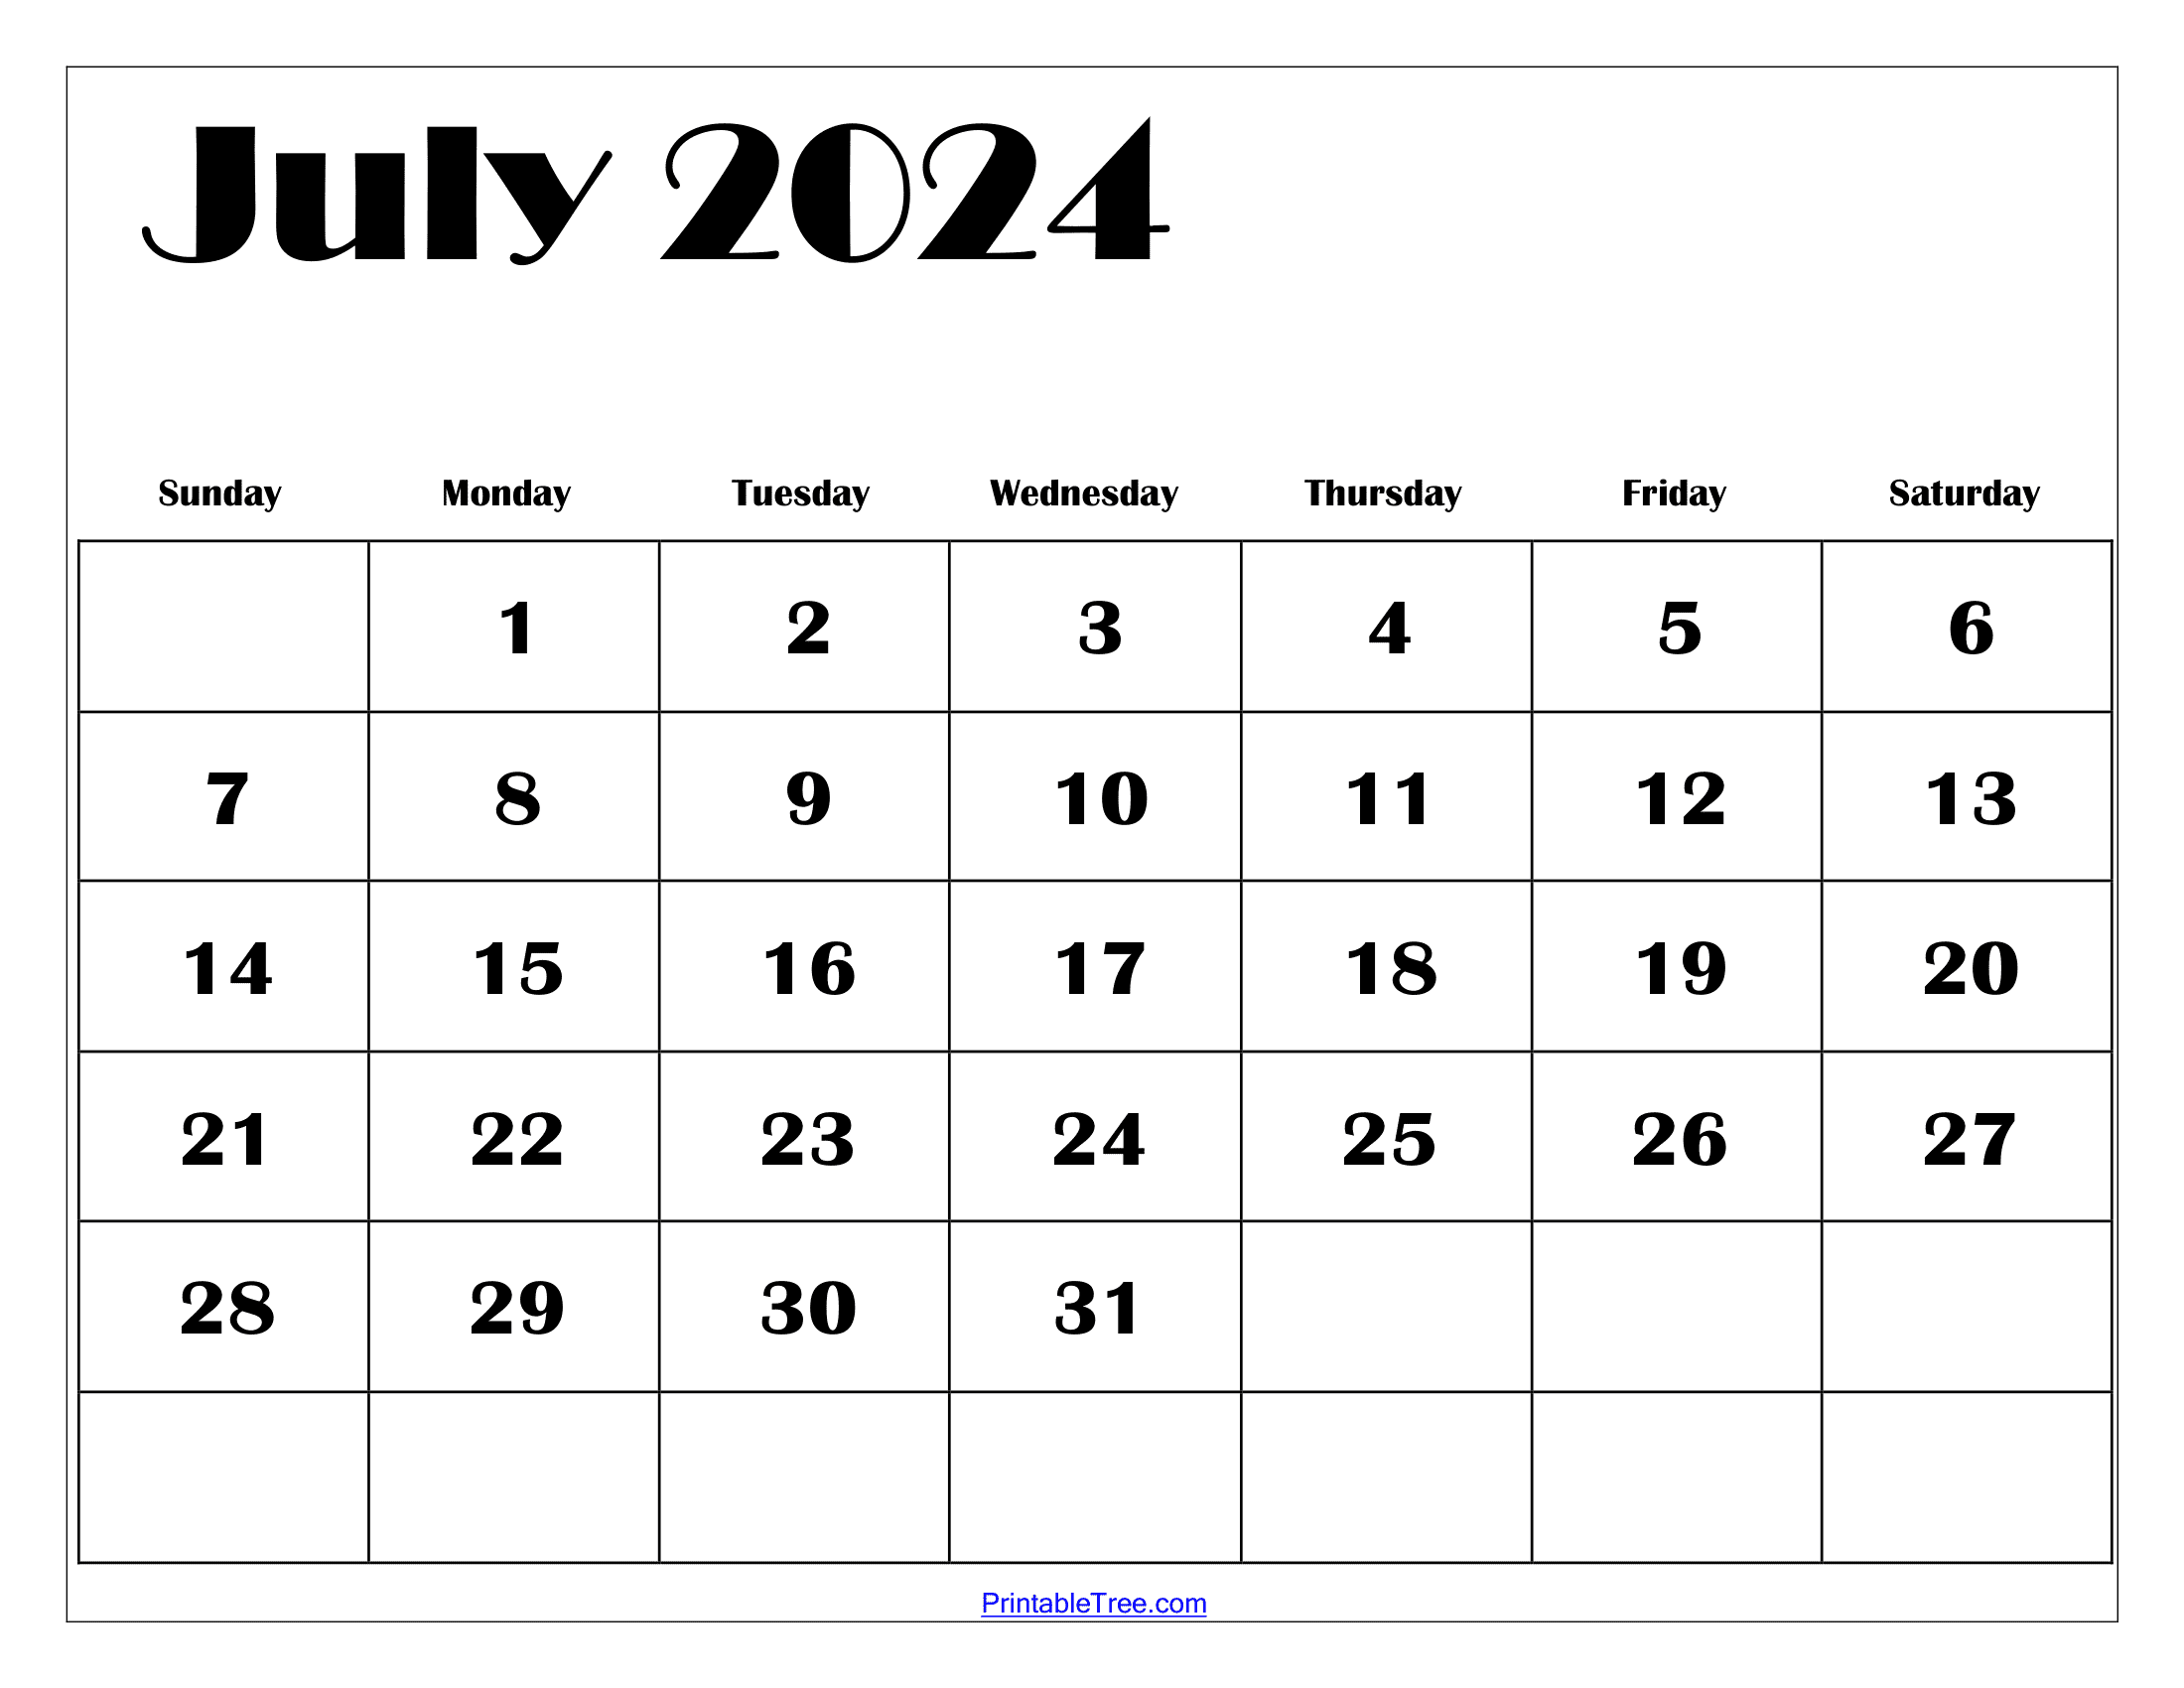 July 2024 Calendar Printable Pdf With Holidays Free Template for Free Printable July 2024 Calendar